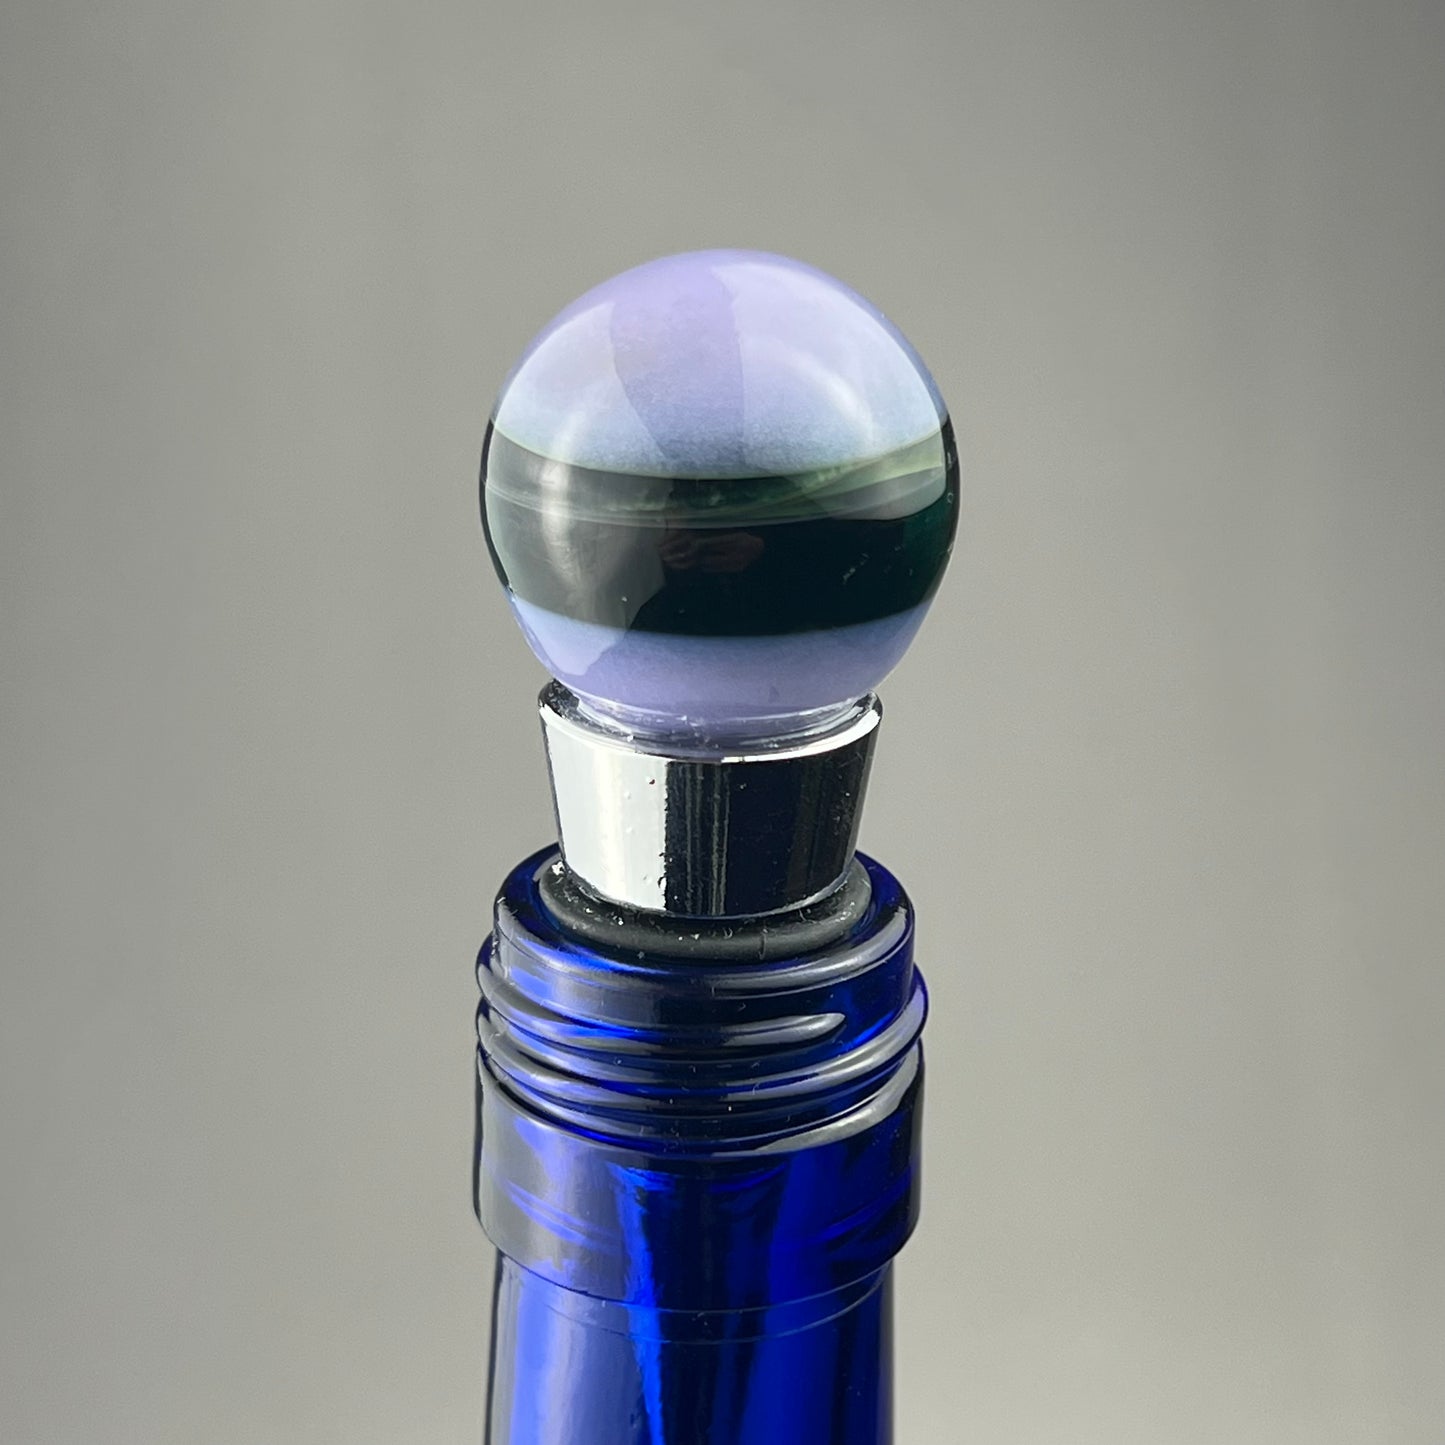 Two-Toned Bottle Stopper